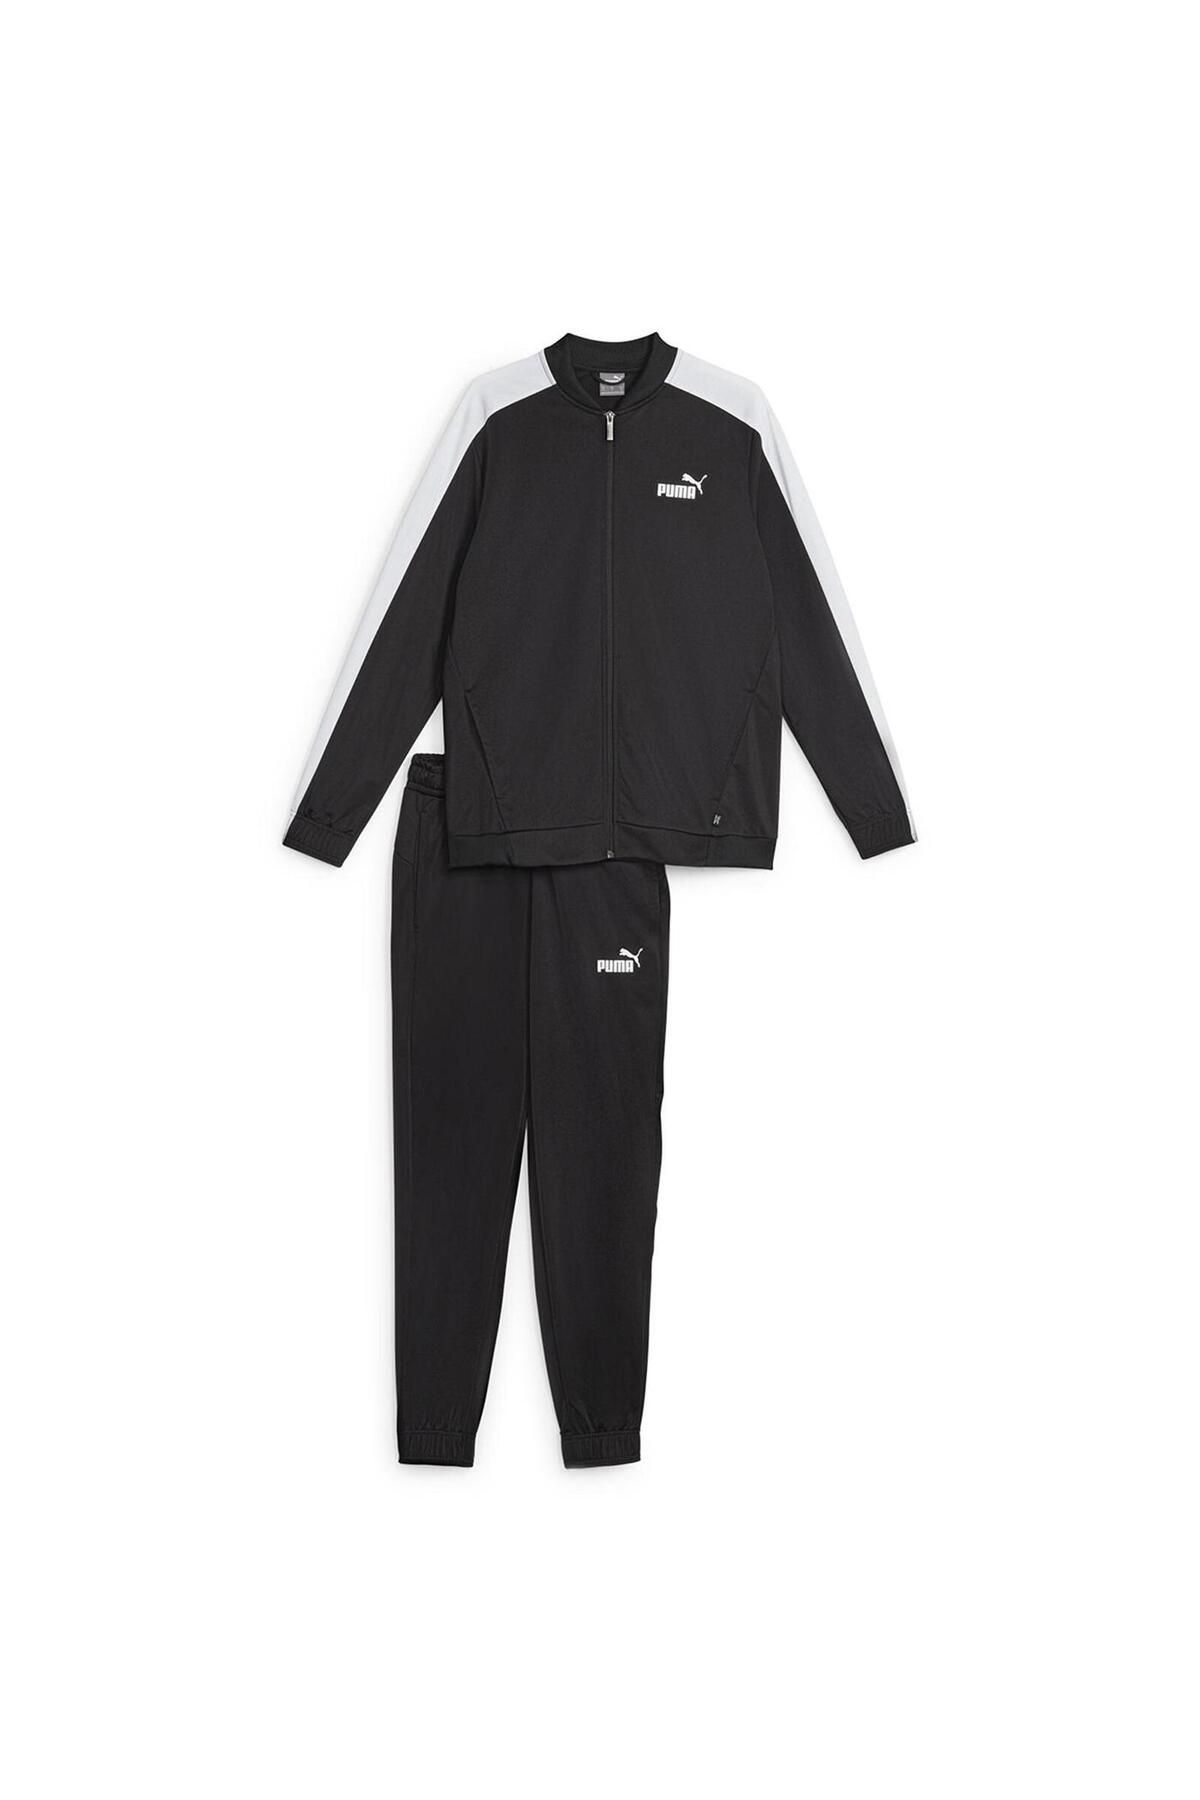 Puma Eşofman Baseball Tricot Suit Erk Siyah 677428-01